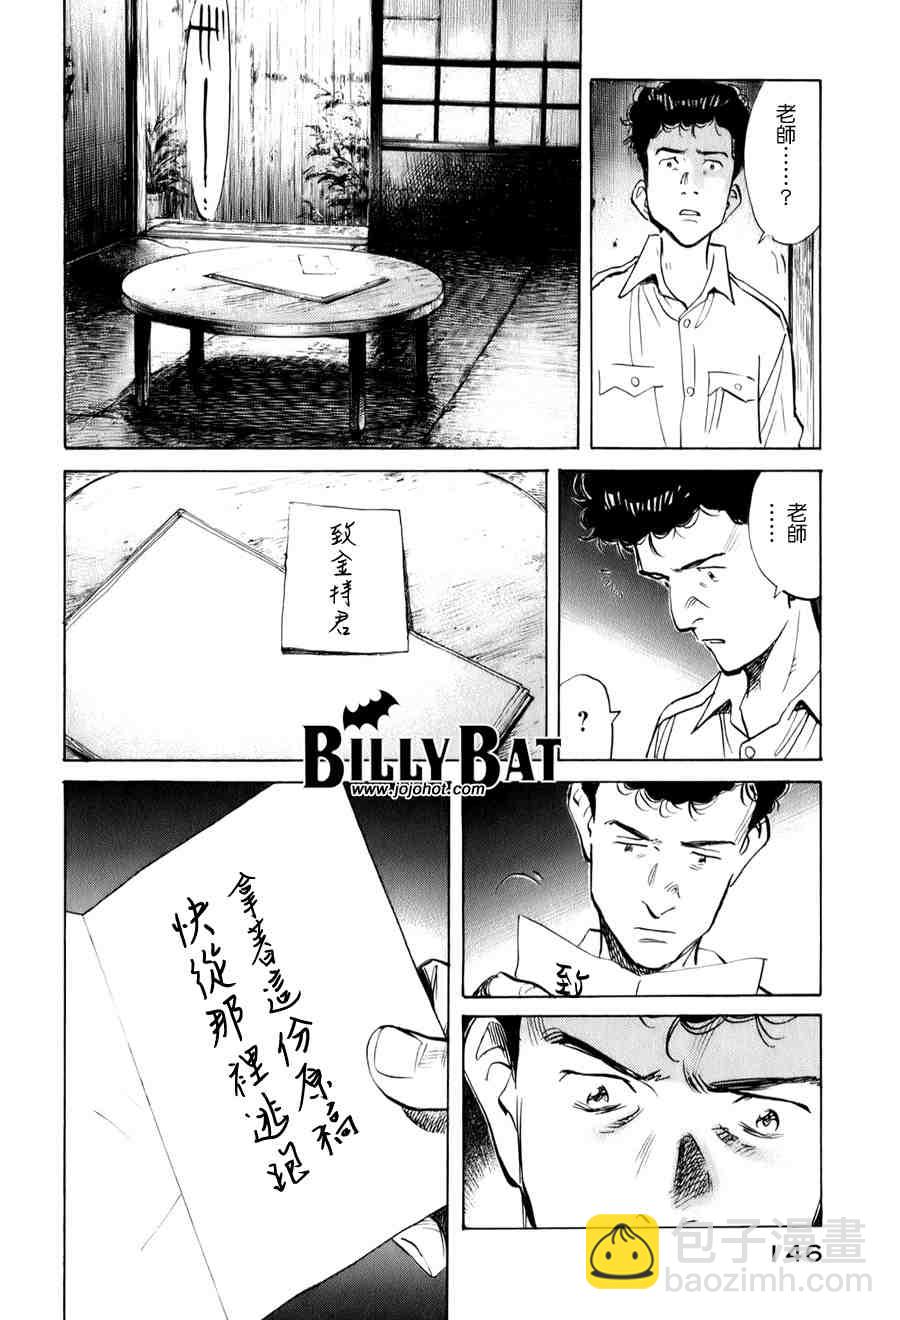 Billy_Bat - 第1卷(3/4) - 1